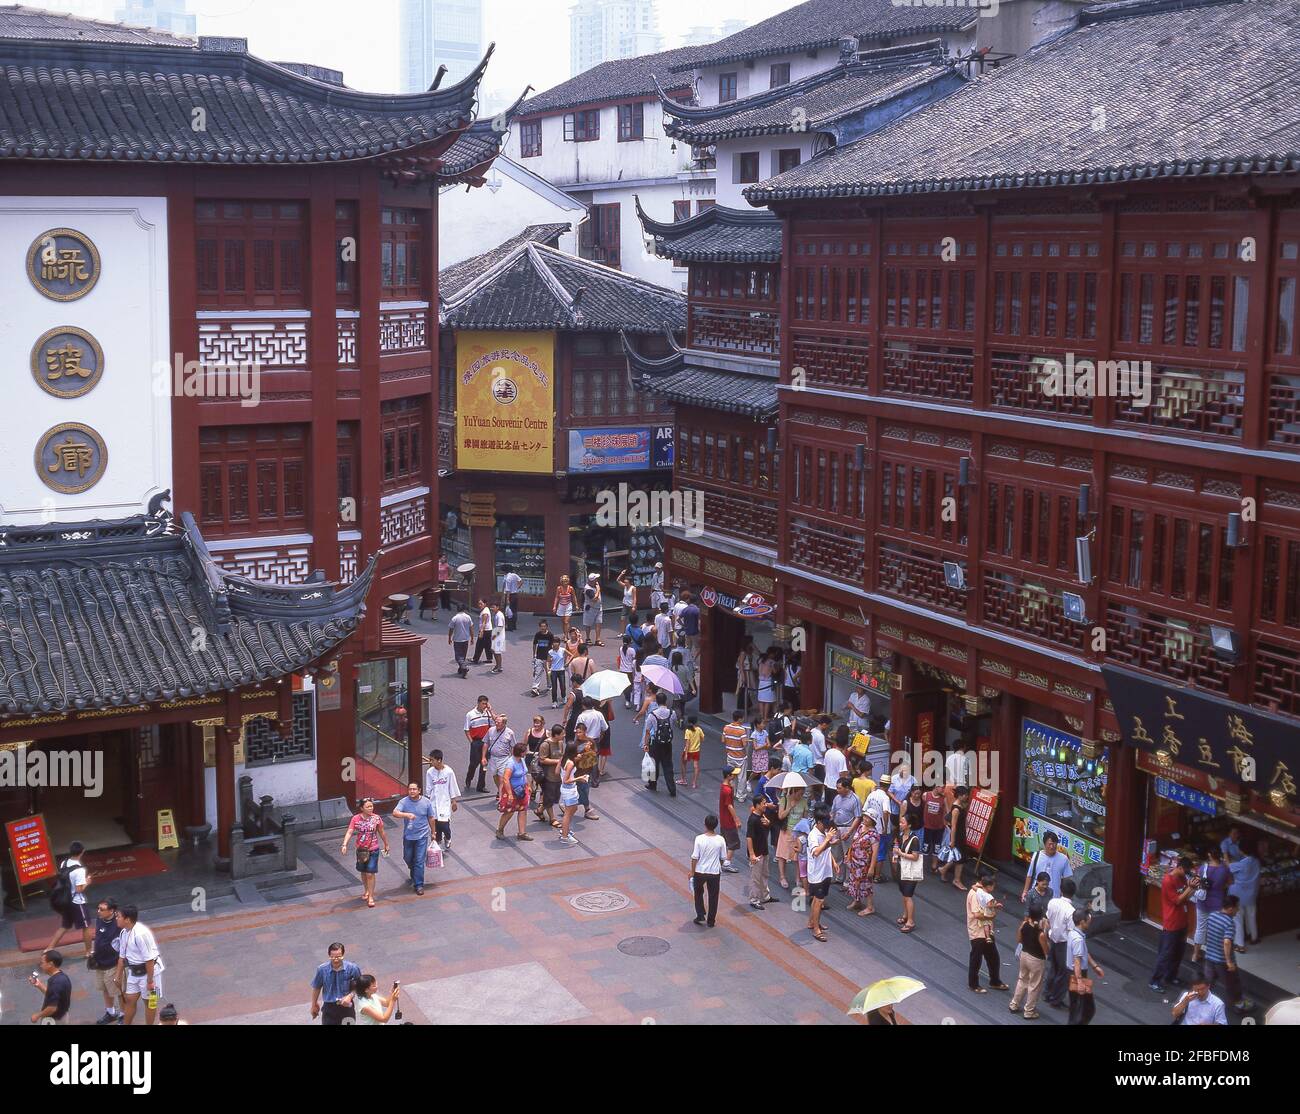 Negozi e teahouses, Yu (Yuyuan) Giardino, Huangpu Qu, Shanghai, Repubblica popolare Cinese Foto Stock